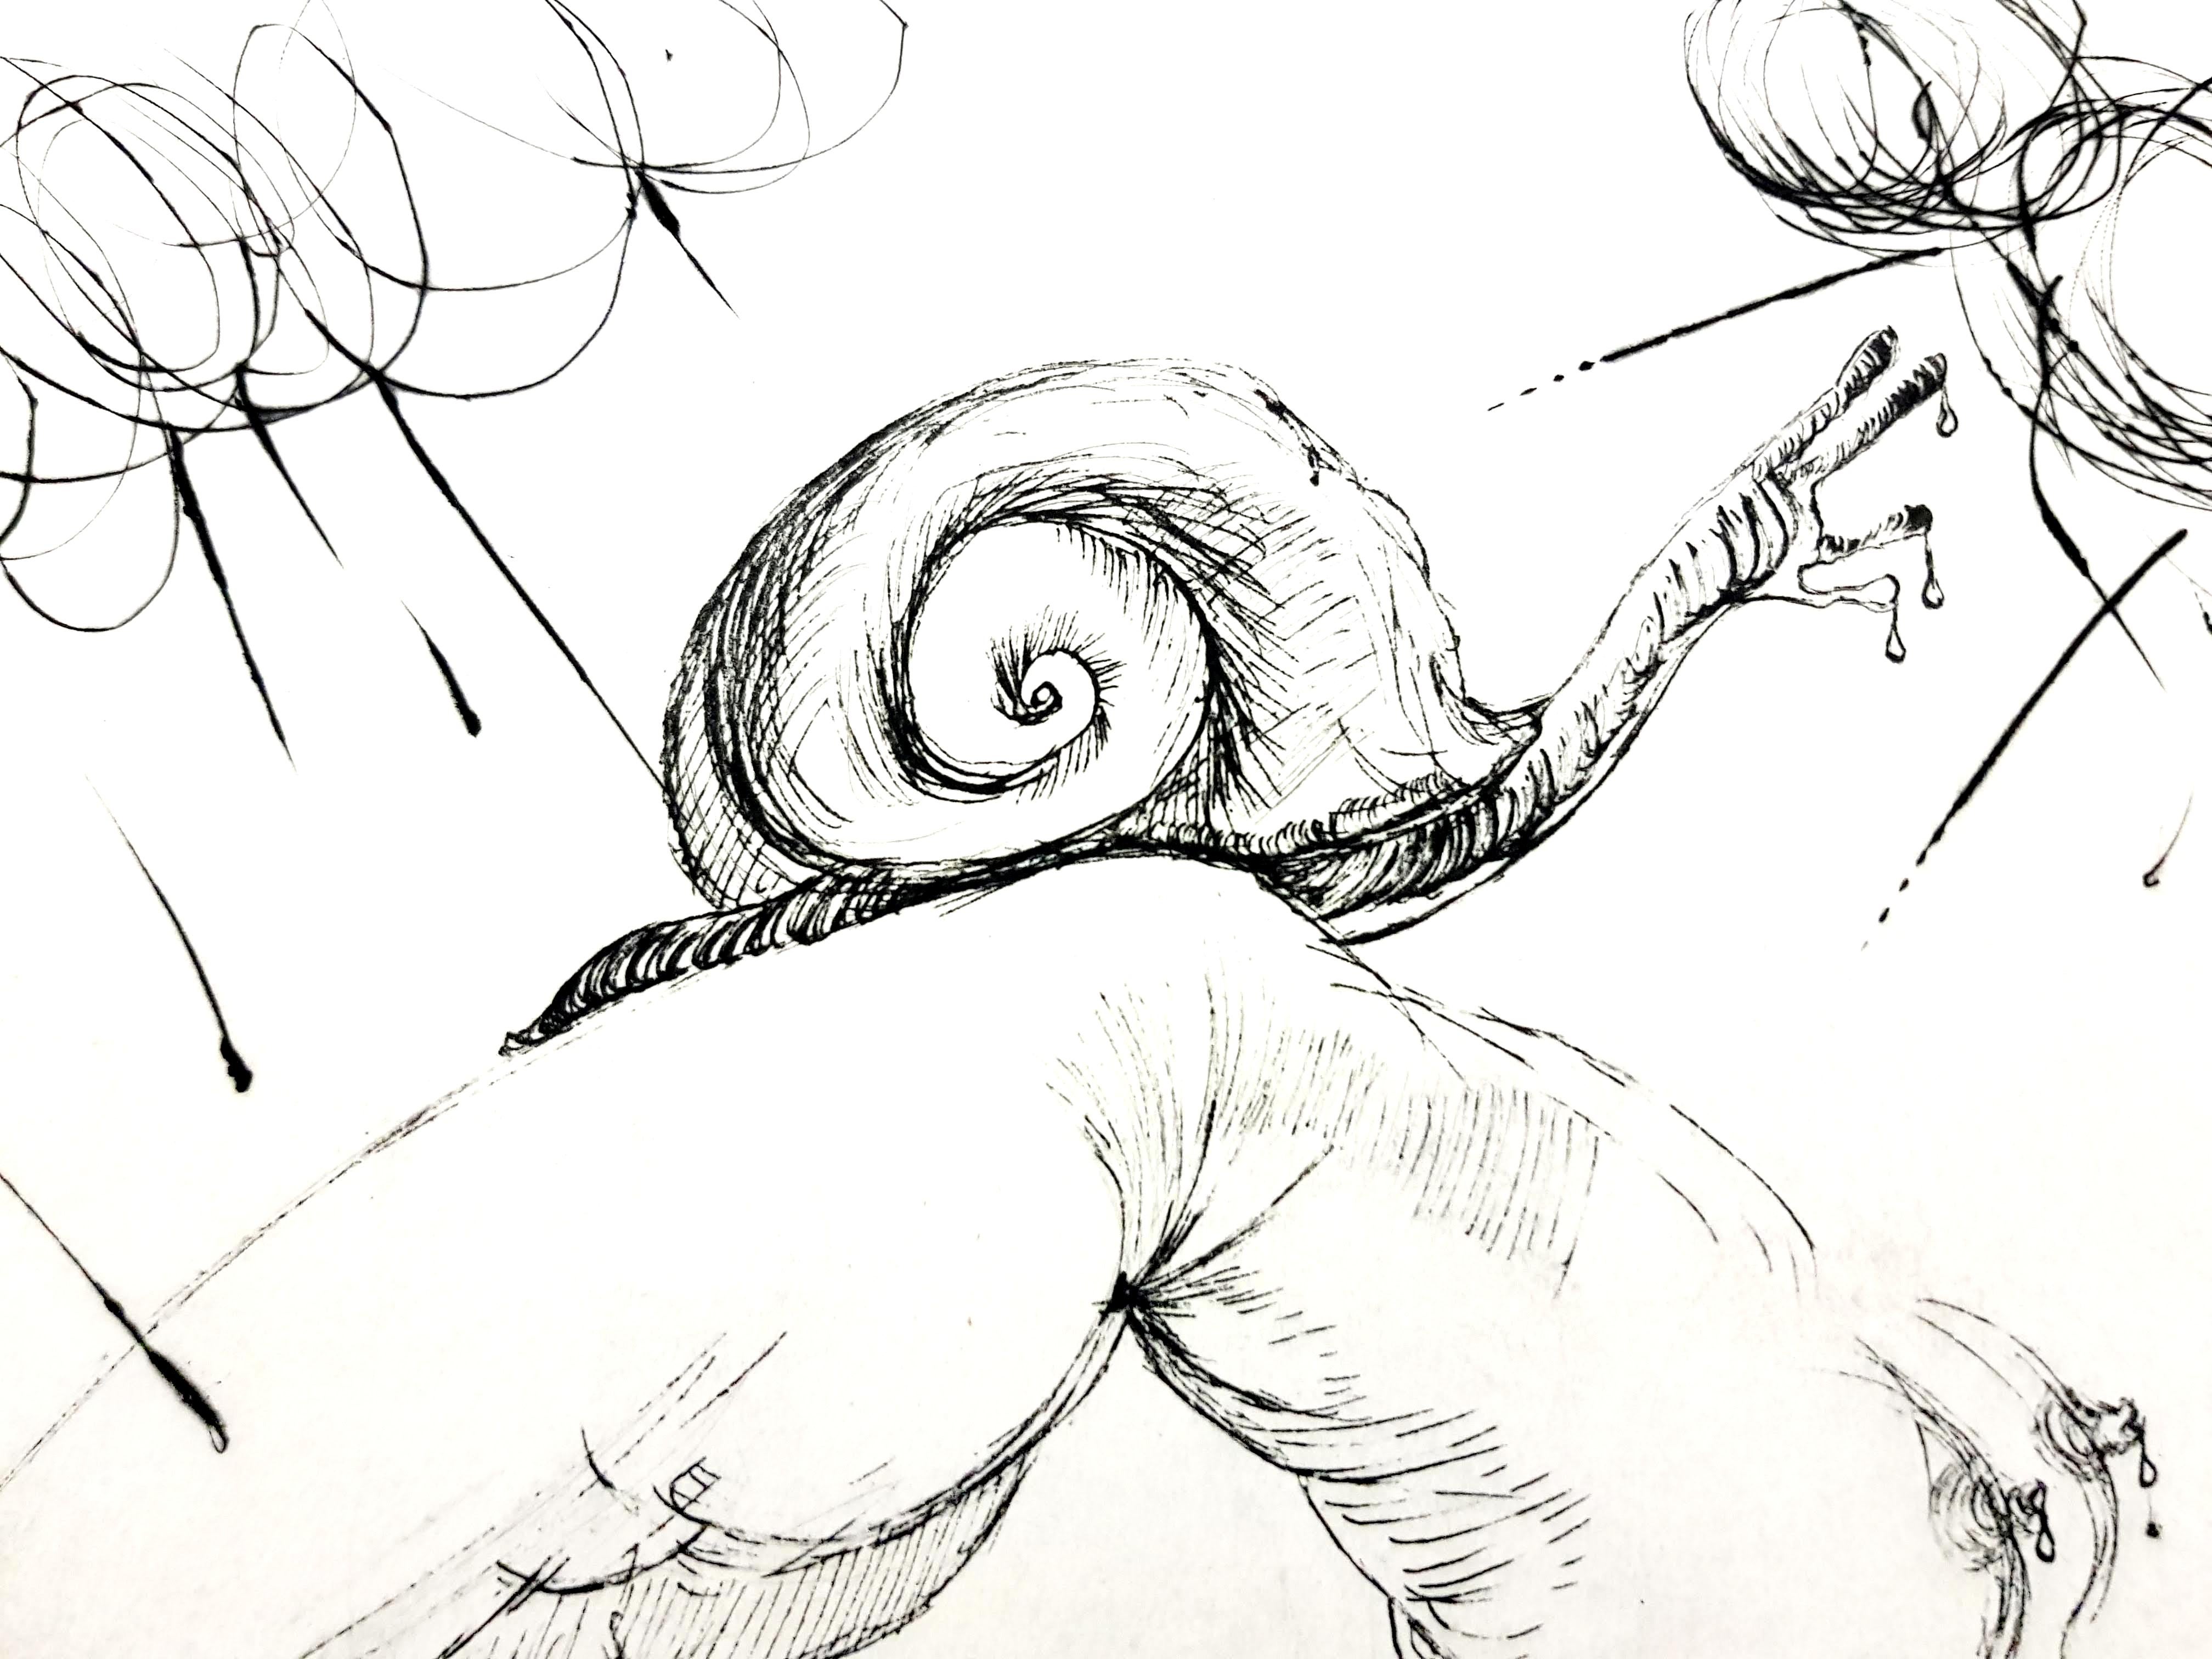 Salvador Dali - Nude with Snail - Surrealist Print by Salvador Dalí